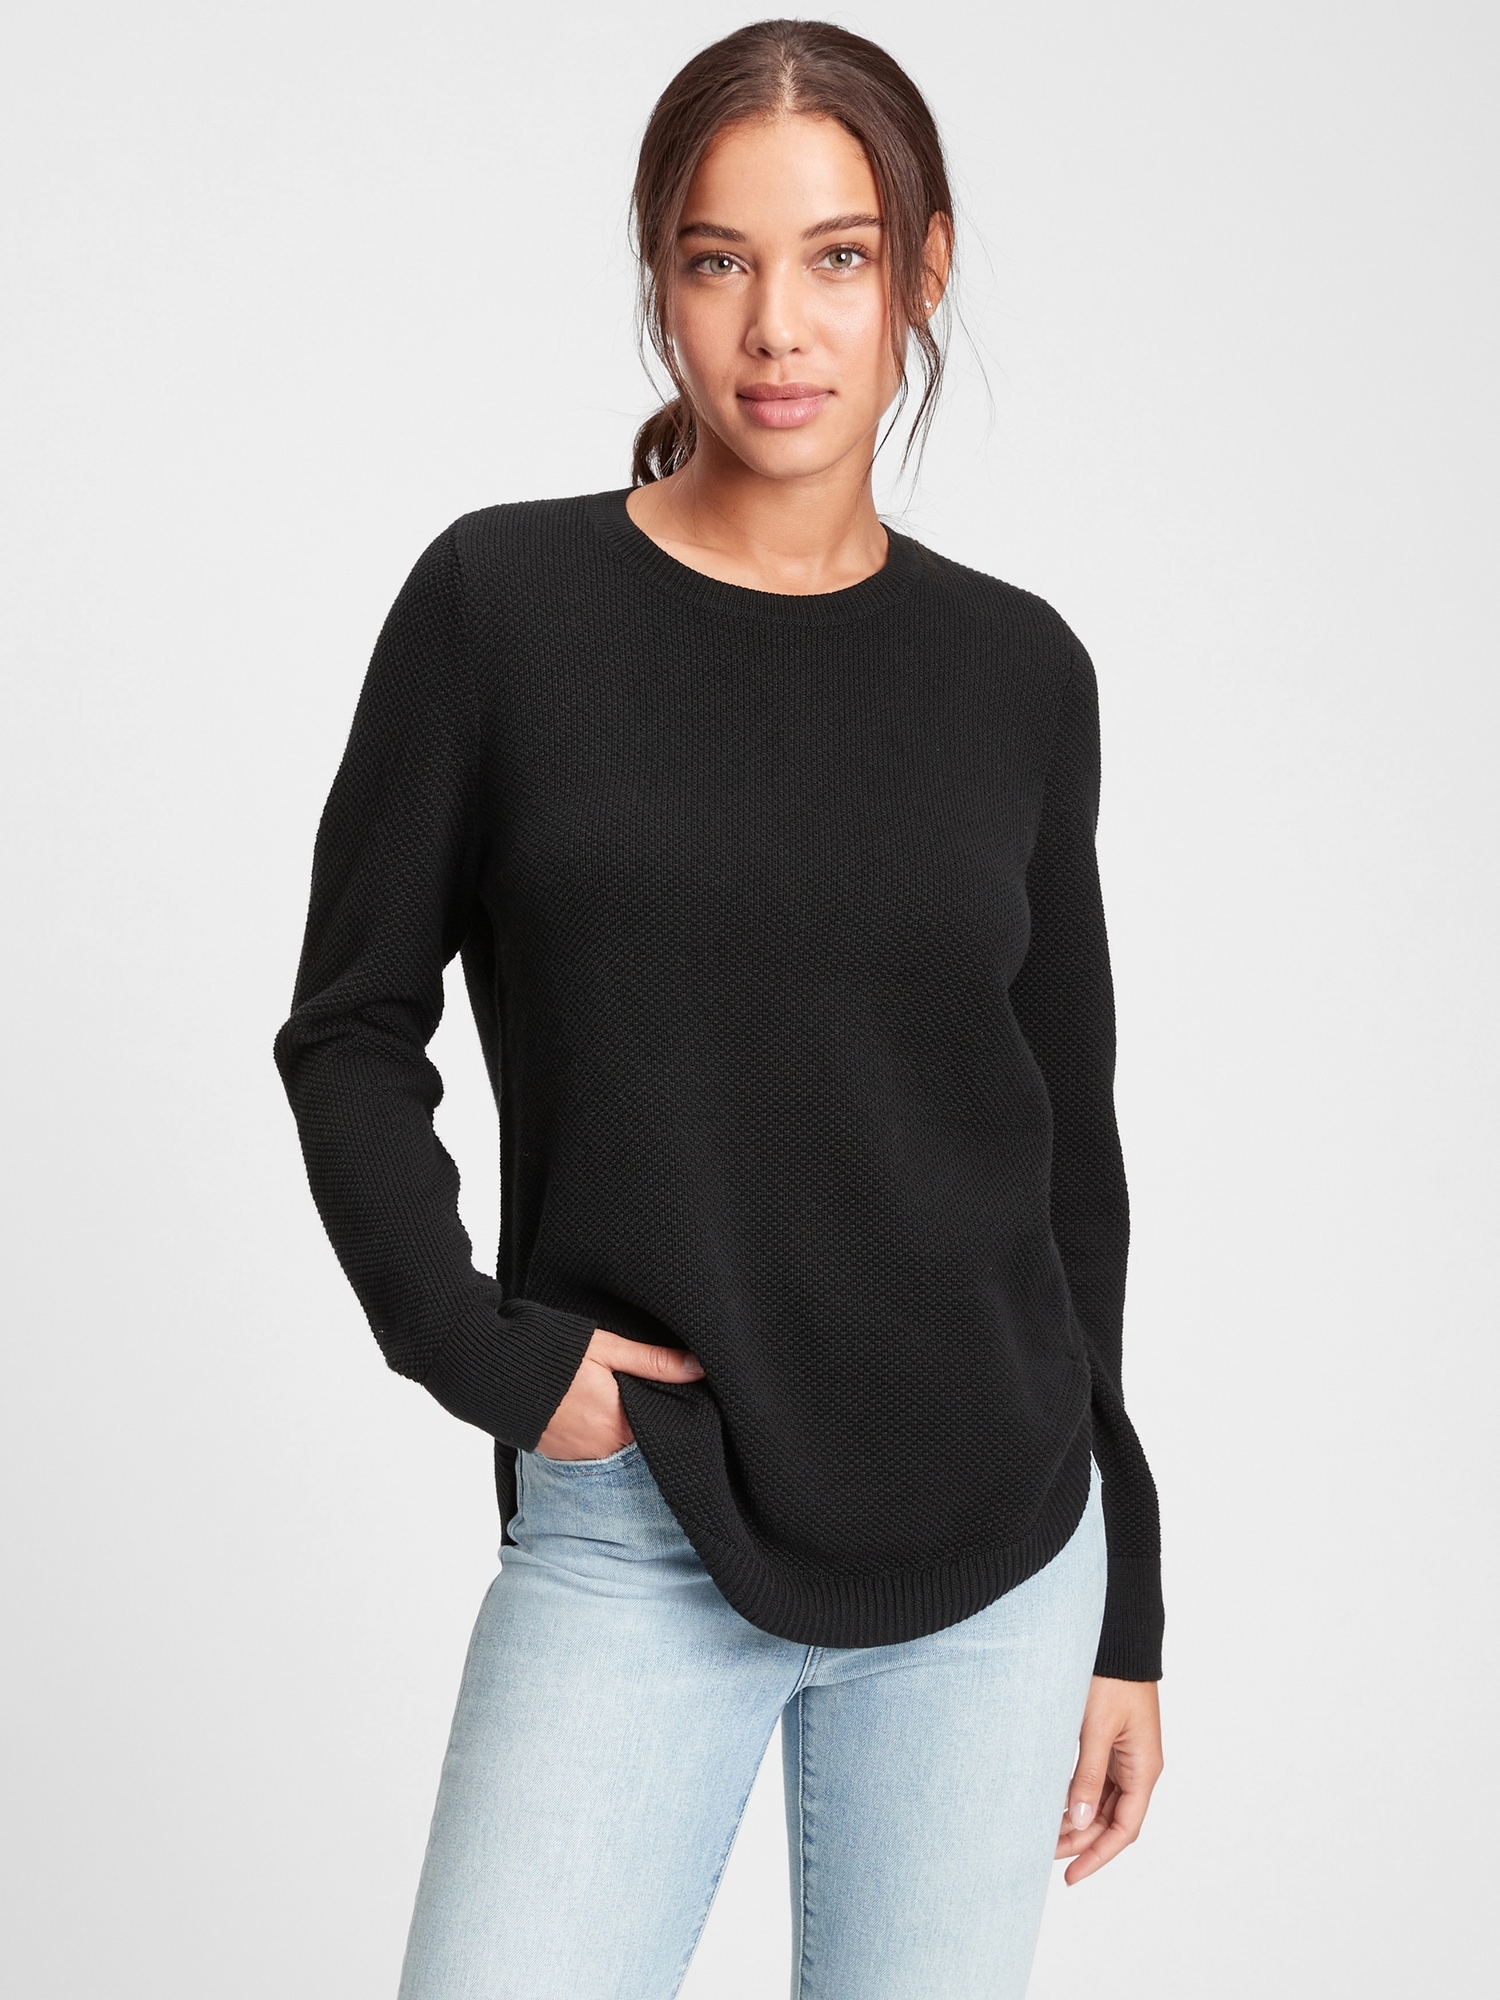 Curved Hem Crewneck Sweater | Gap Factory